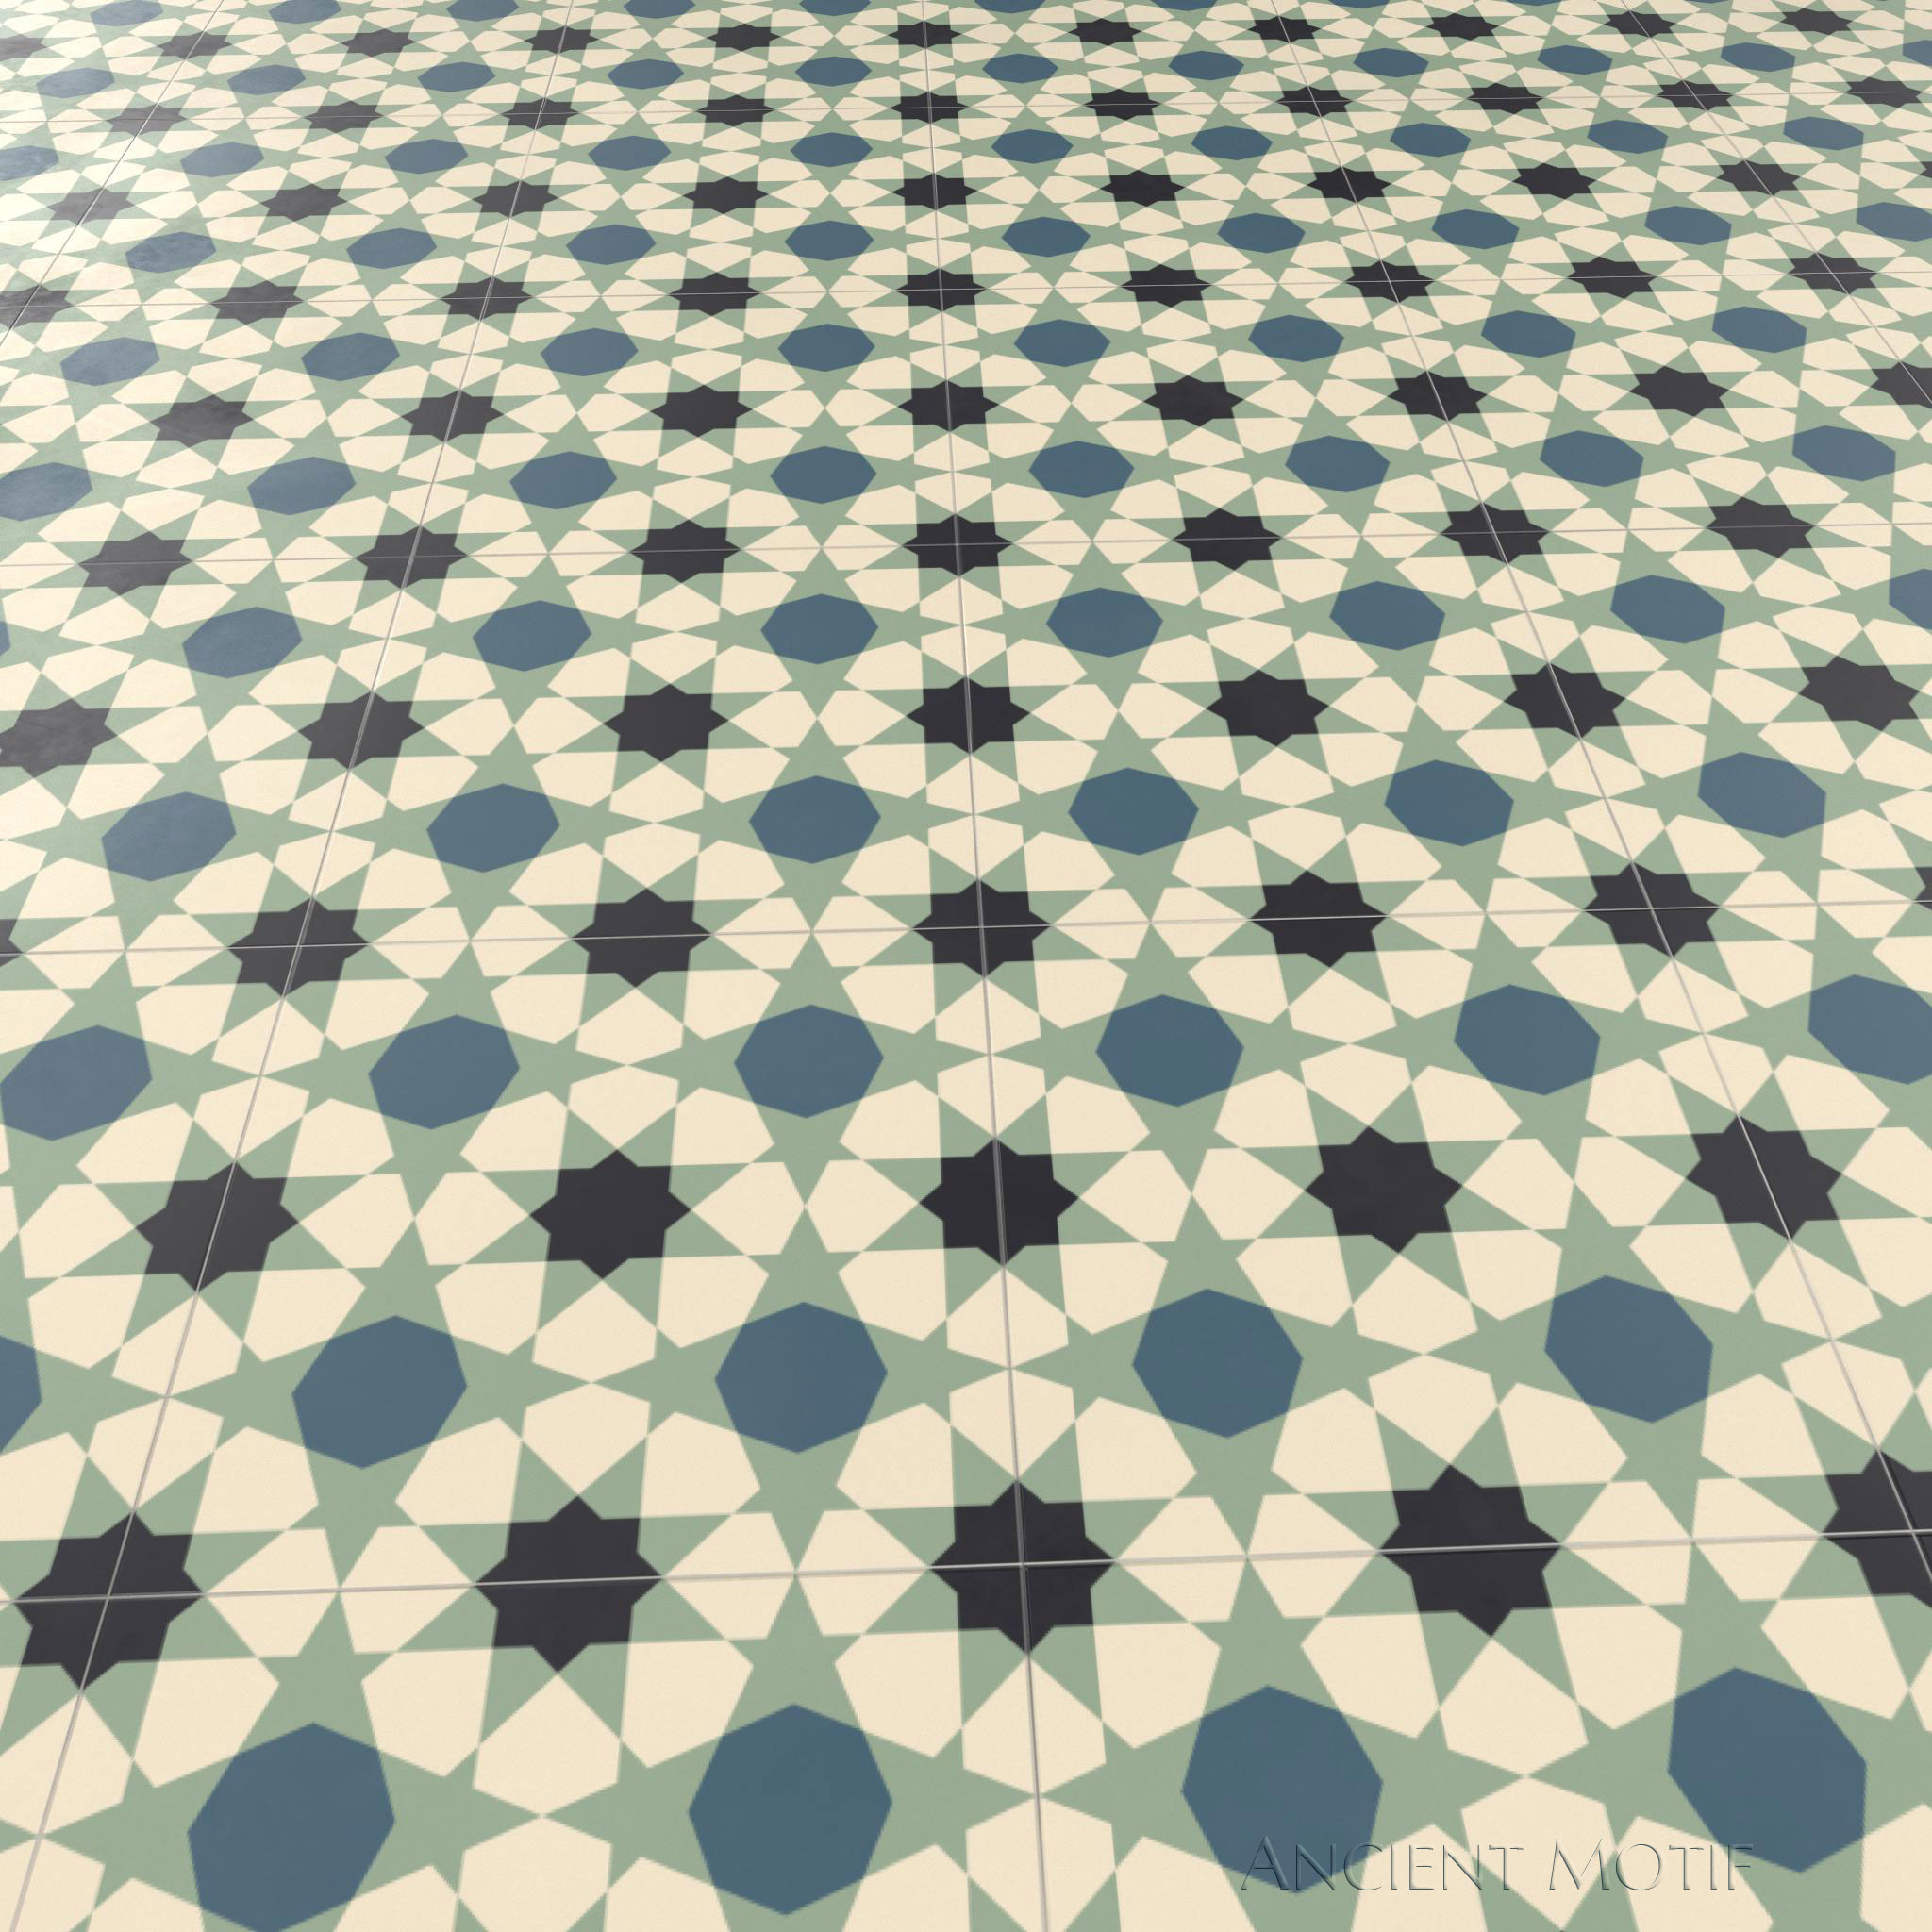 Alcazar Zellige Tile Floor in Onyx, Sage and Spruce